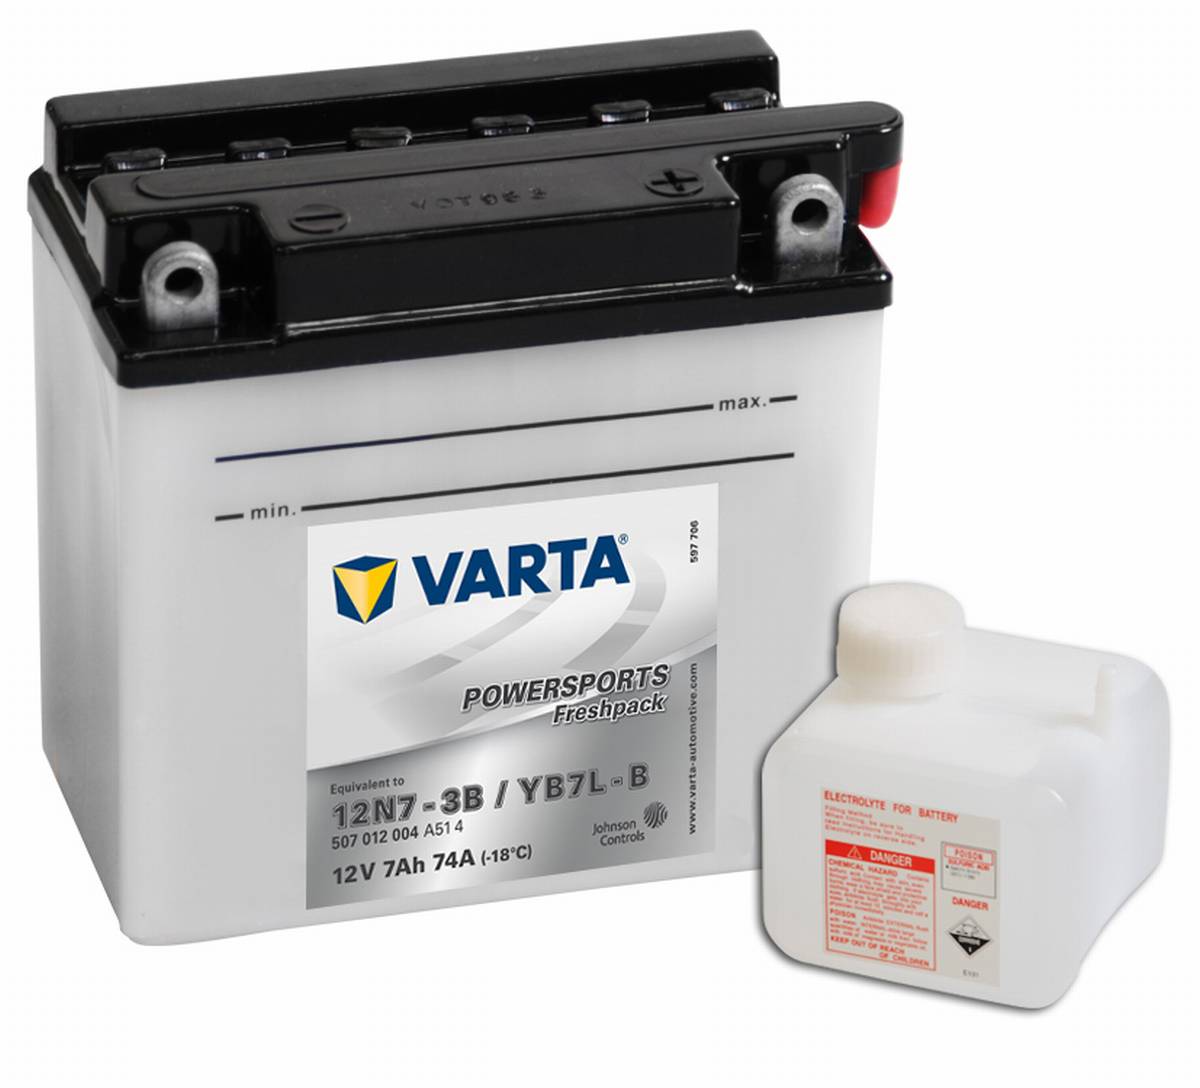 Varta Powersports Freshpack 12N7-3B Motorrad Batterie YB7L-B